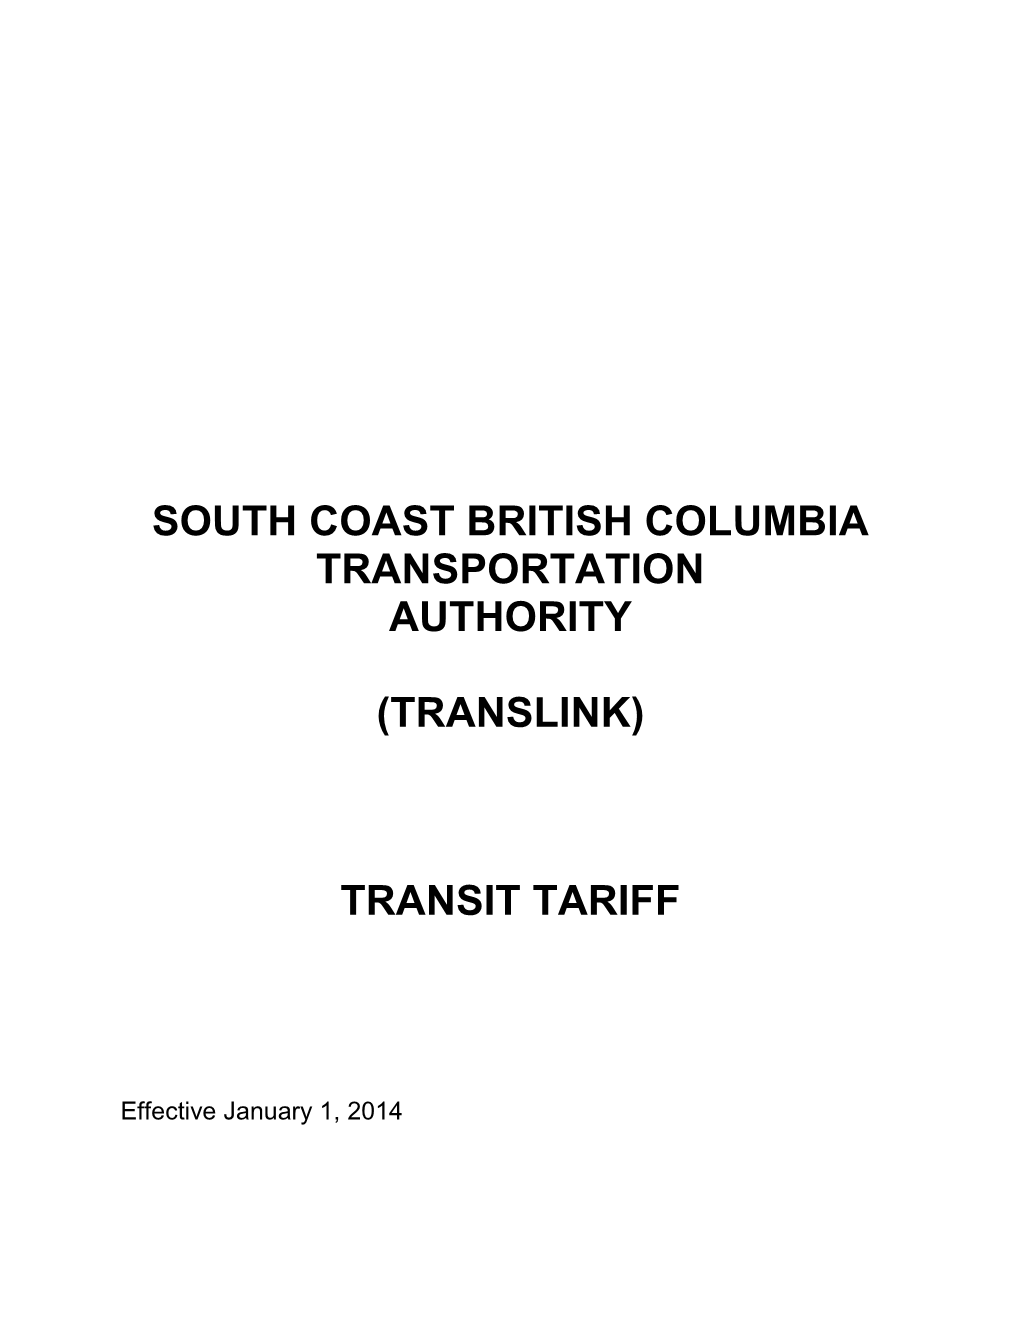 (Translink) Transit Tariff